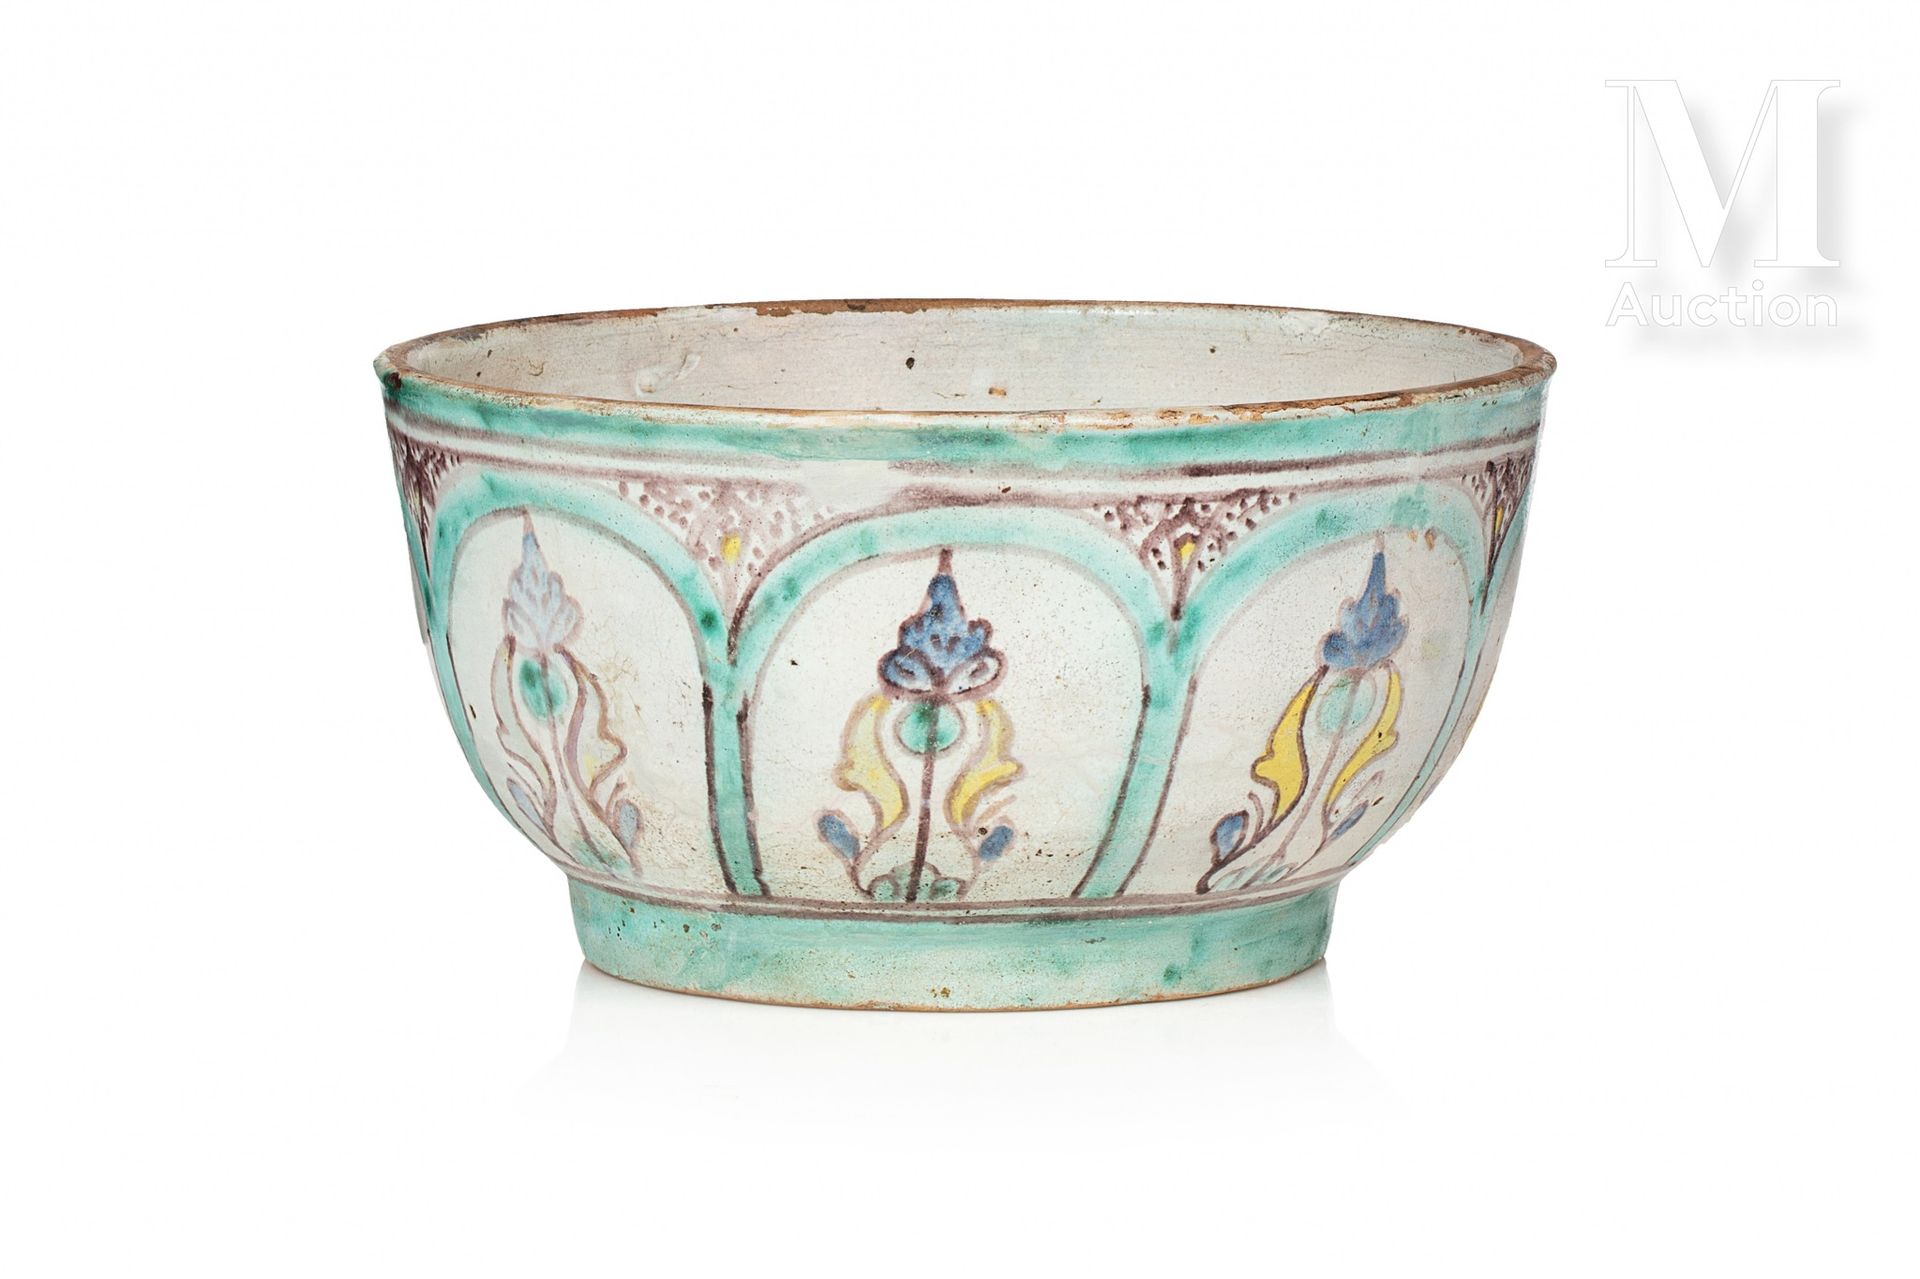 Rare Zlafa aux mihrabs Marokko, 18. Jahrhundert

Schüssel aus Keramik, bemalt au&hellip;